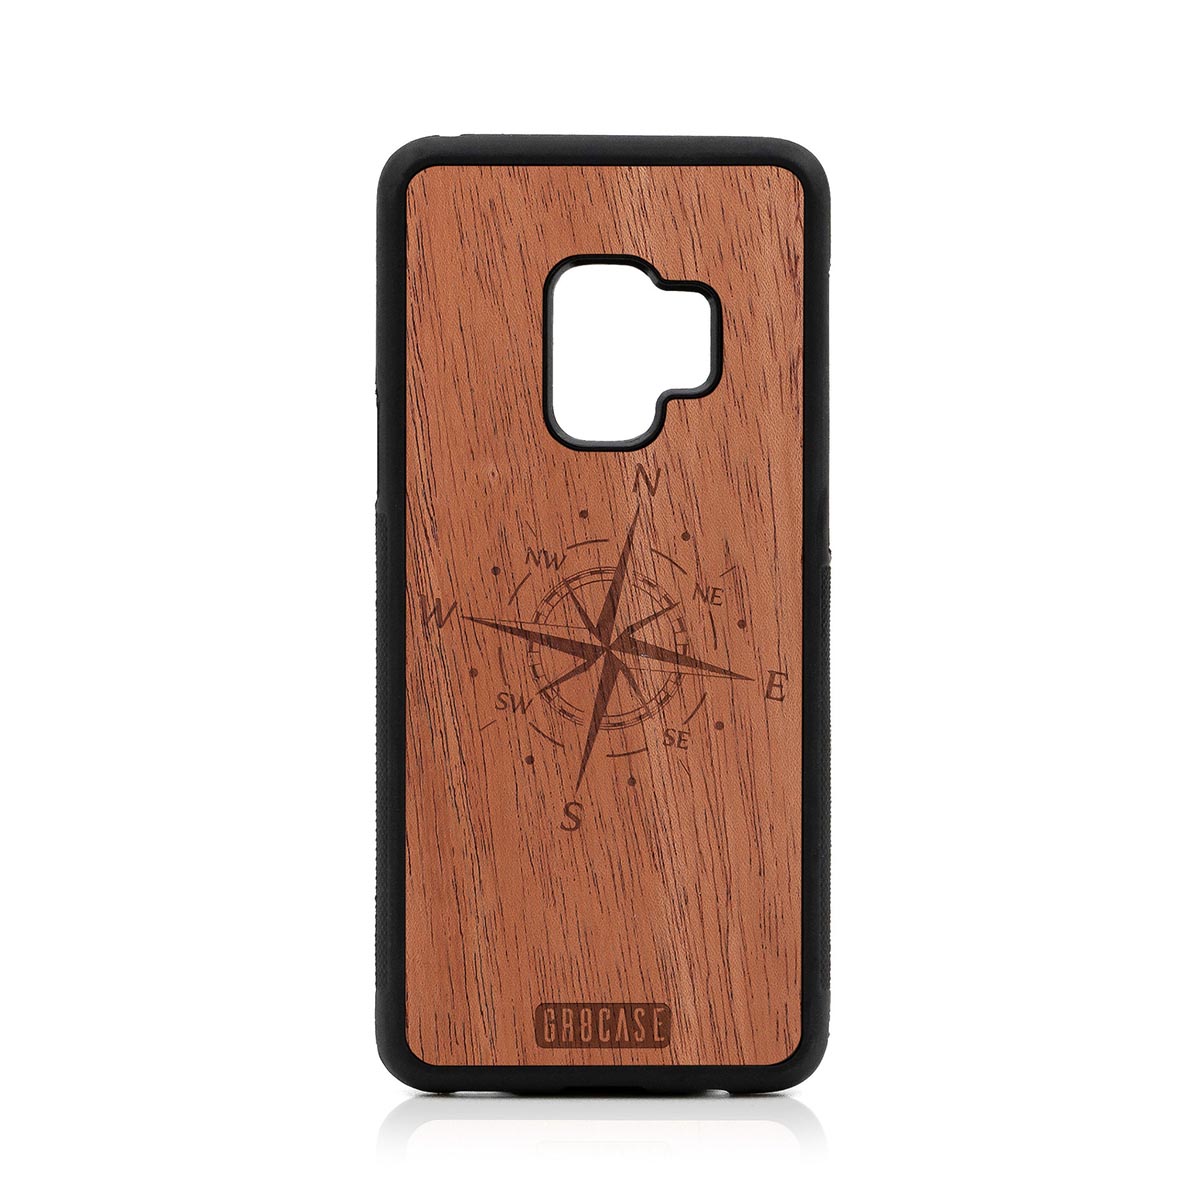 Compass Design Wood Case Samsung Galaxy S9 by GR8CASE